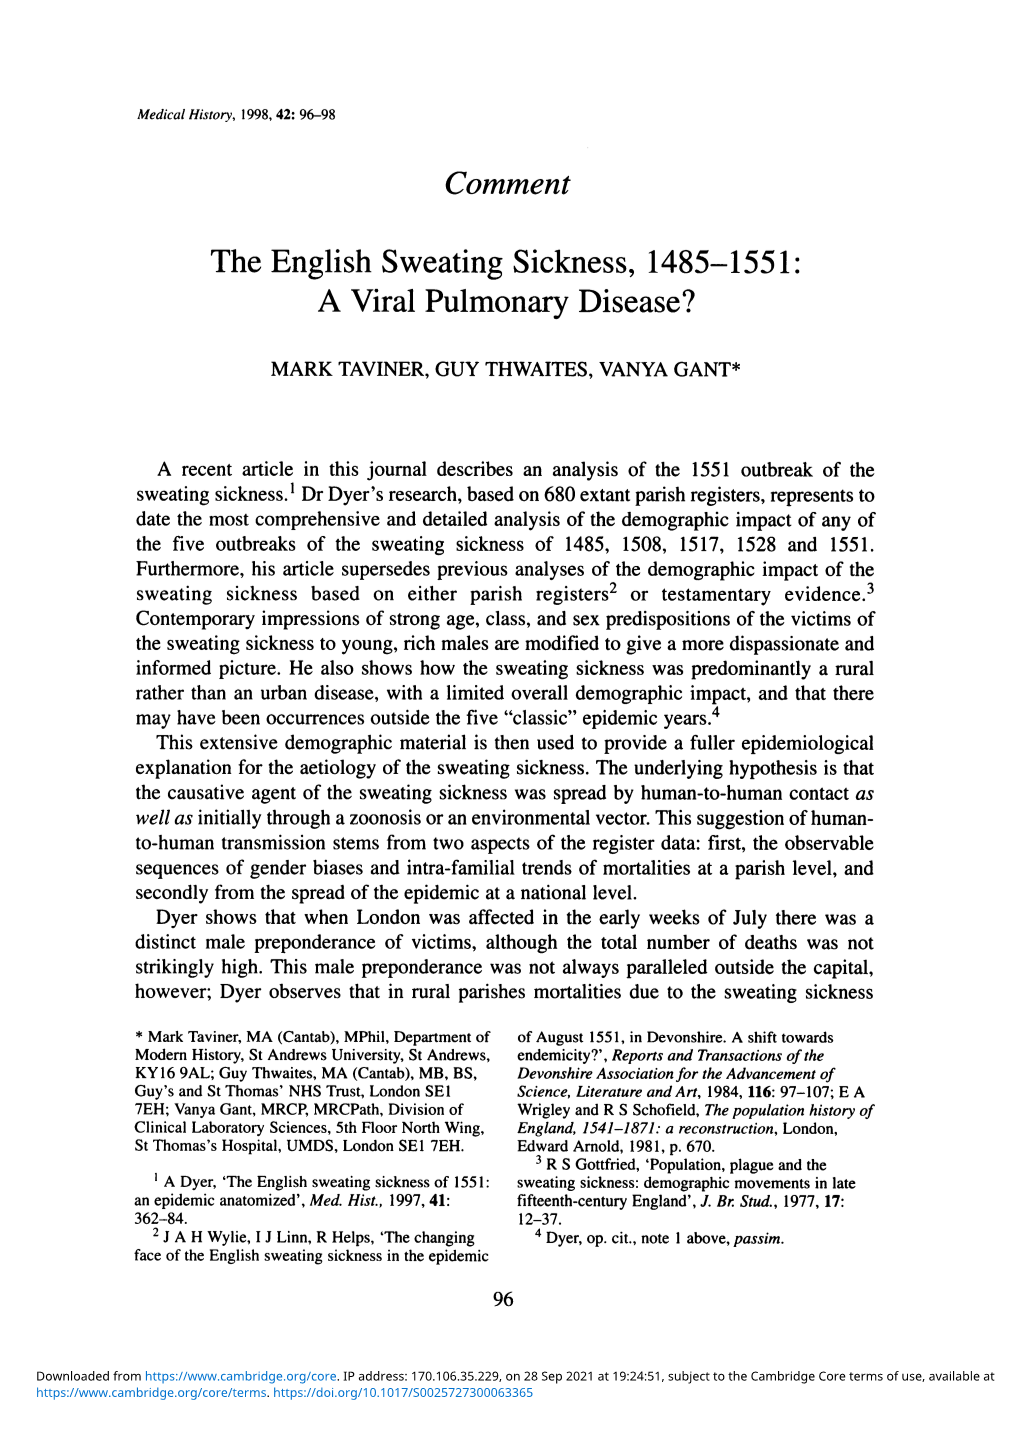 The English Sweating Sickness, 1485-1551: a Viral Pulmonary Disease?